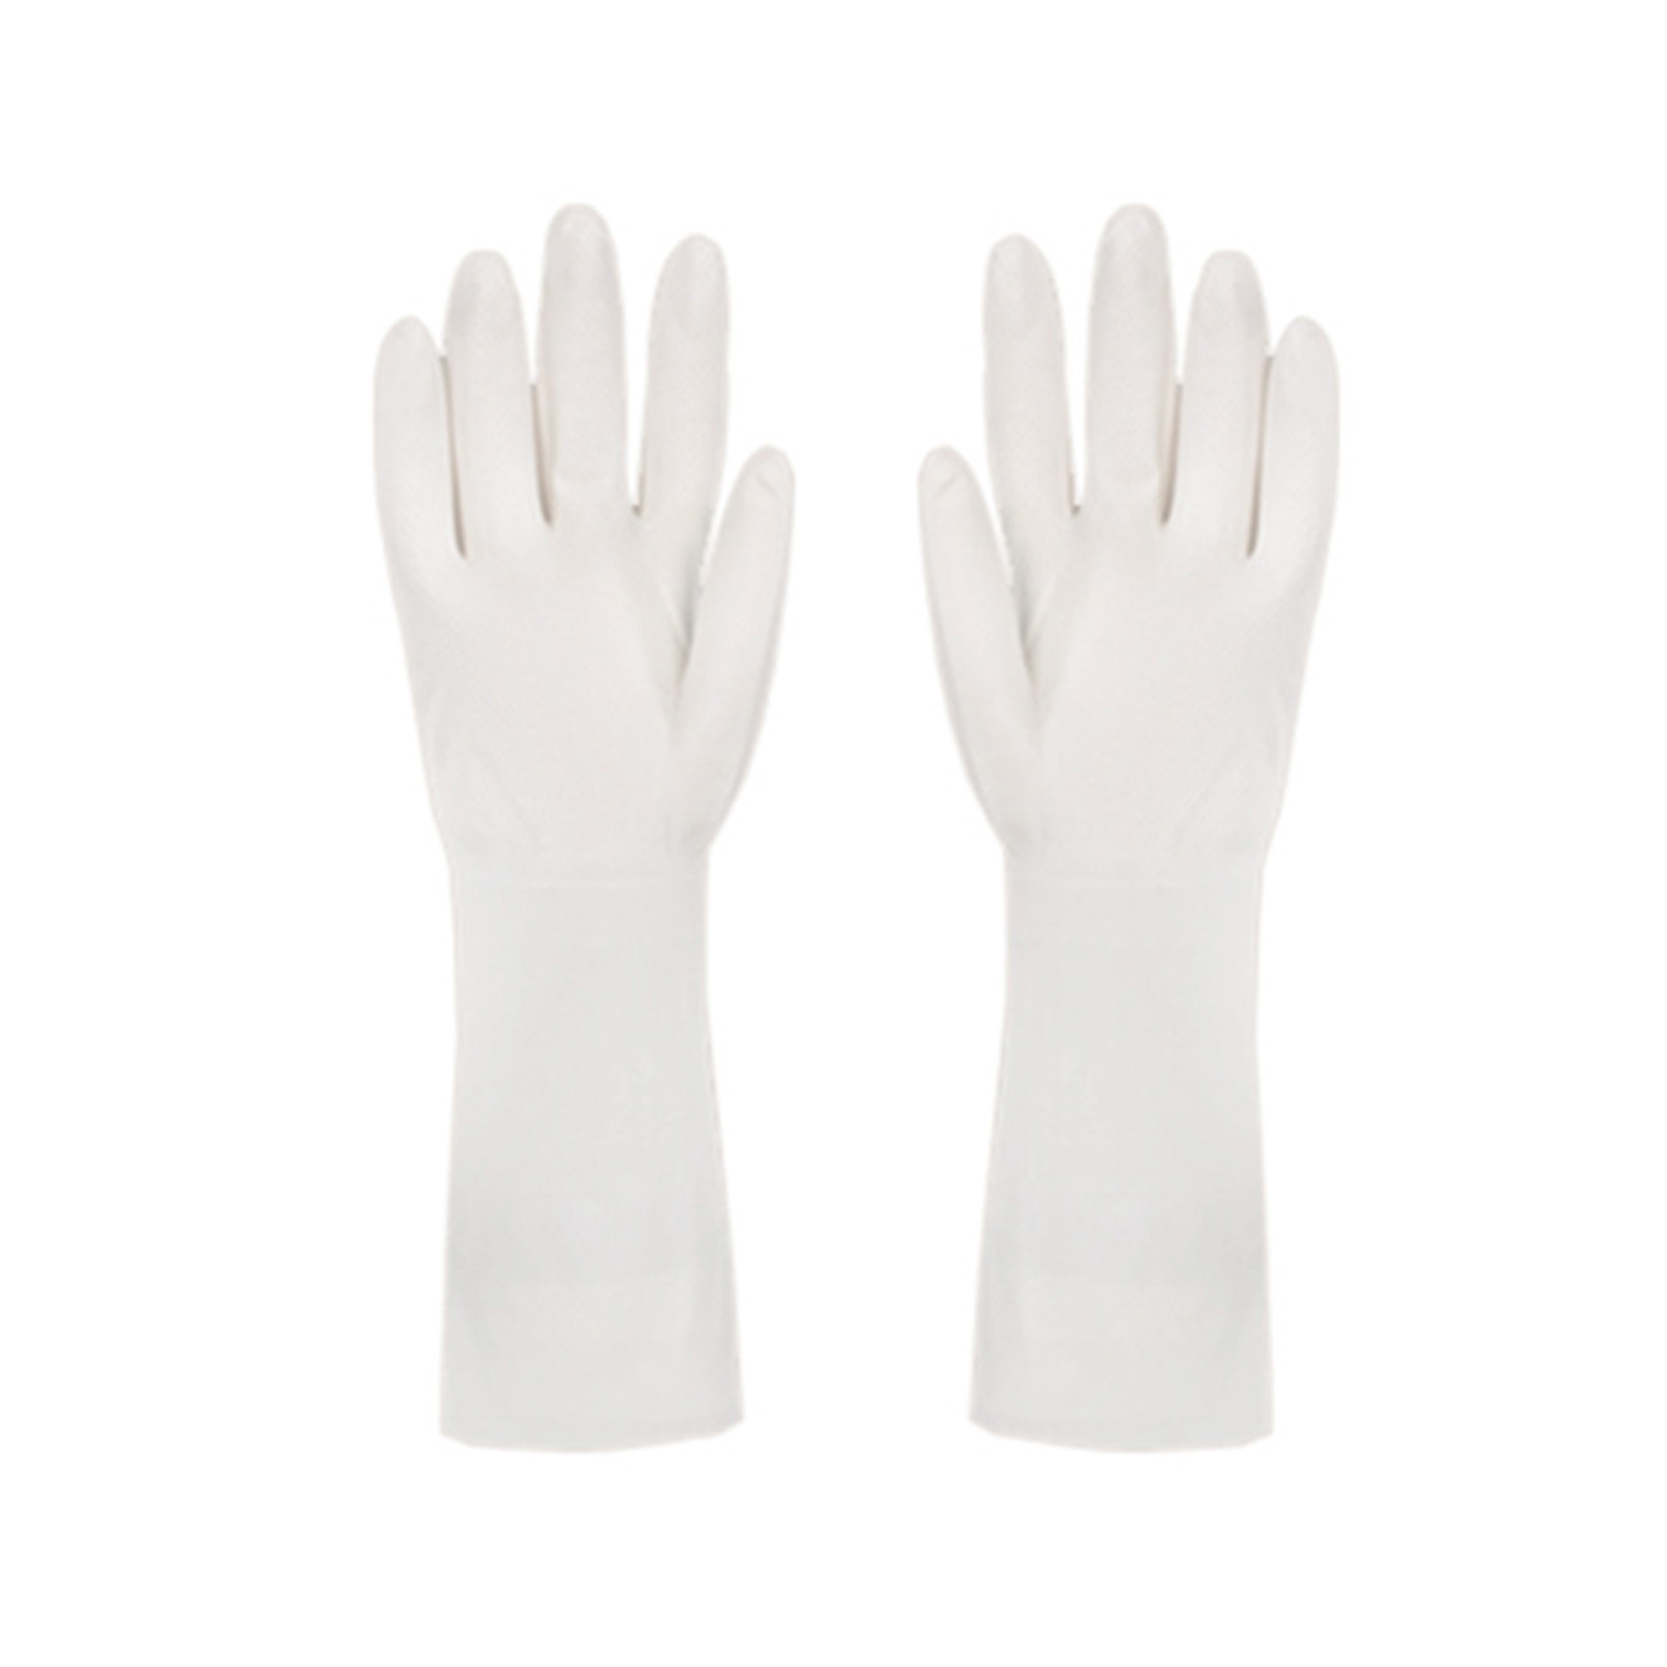 Rubber Nitrile Gloves Reusable Household Cleaning for Kitchen Dishwashing Nitrile Flocking Protective Gloves